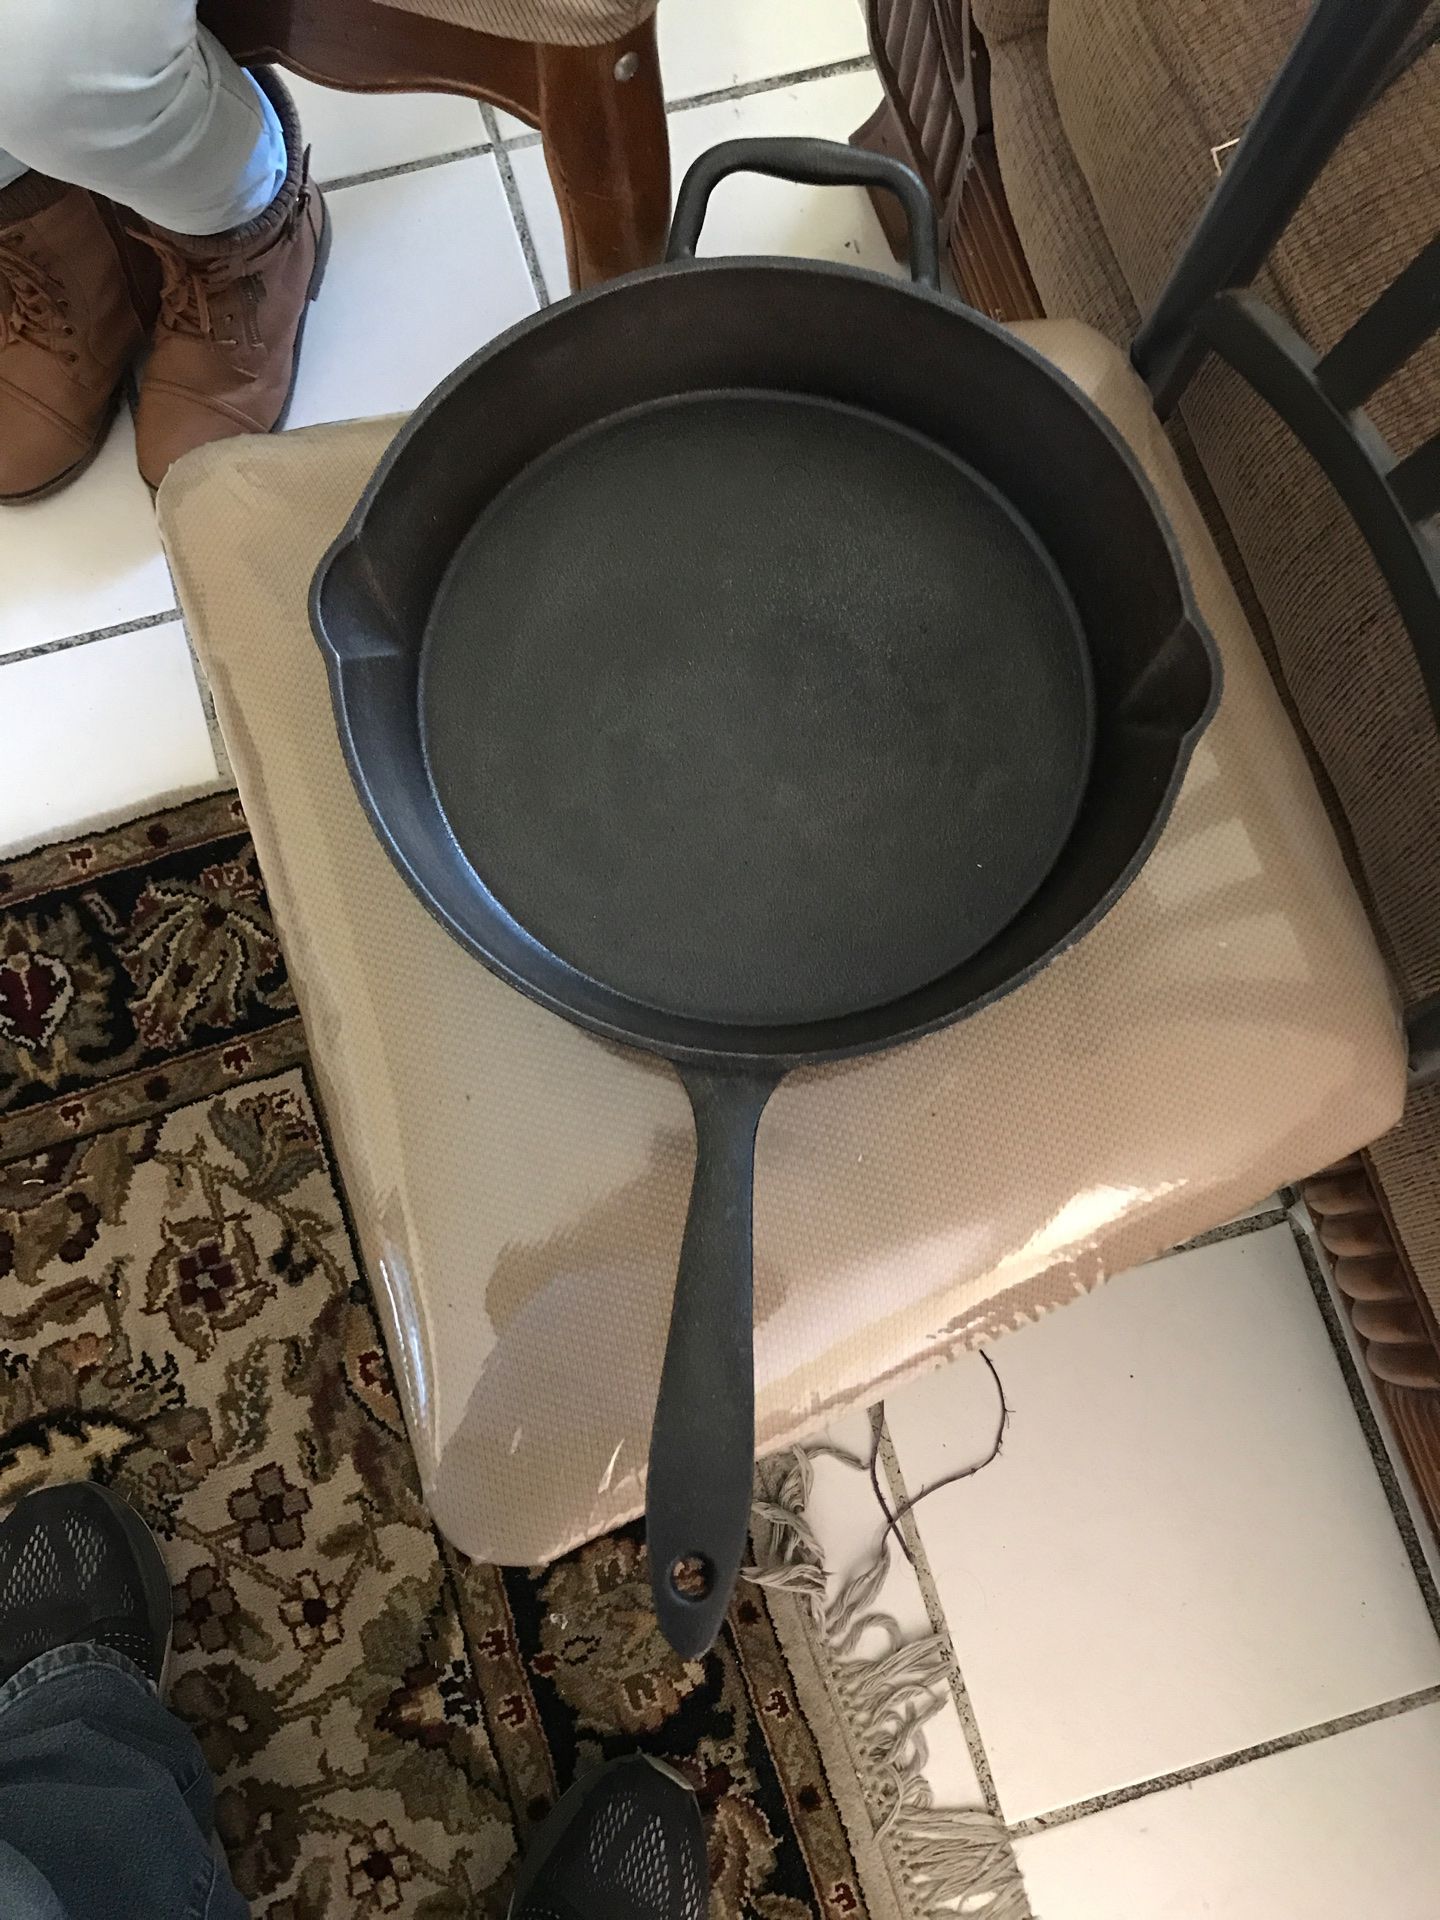 Delmonico cast iron pan